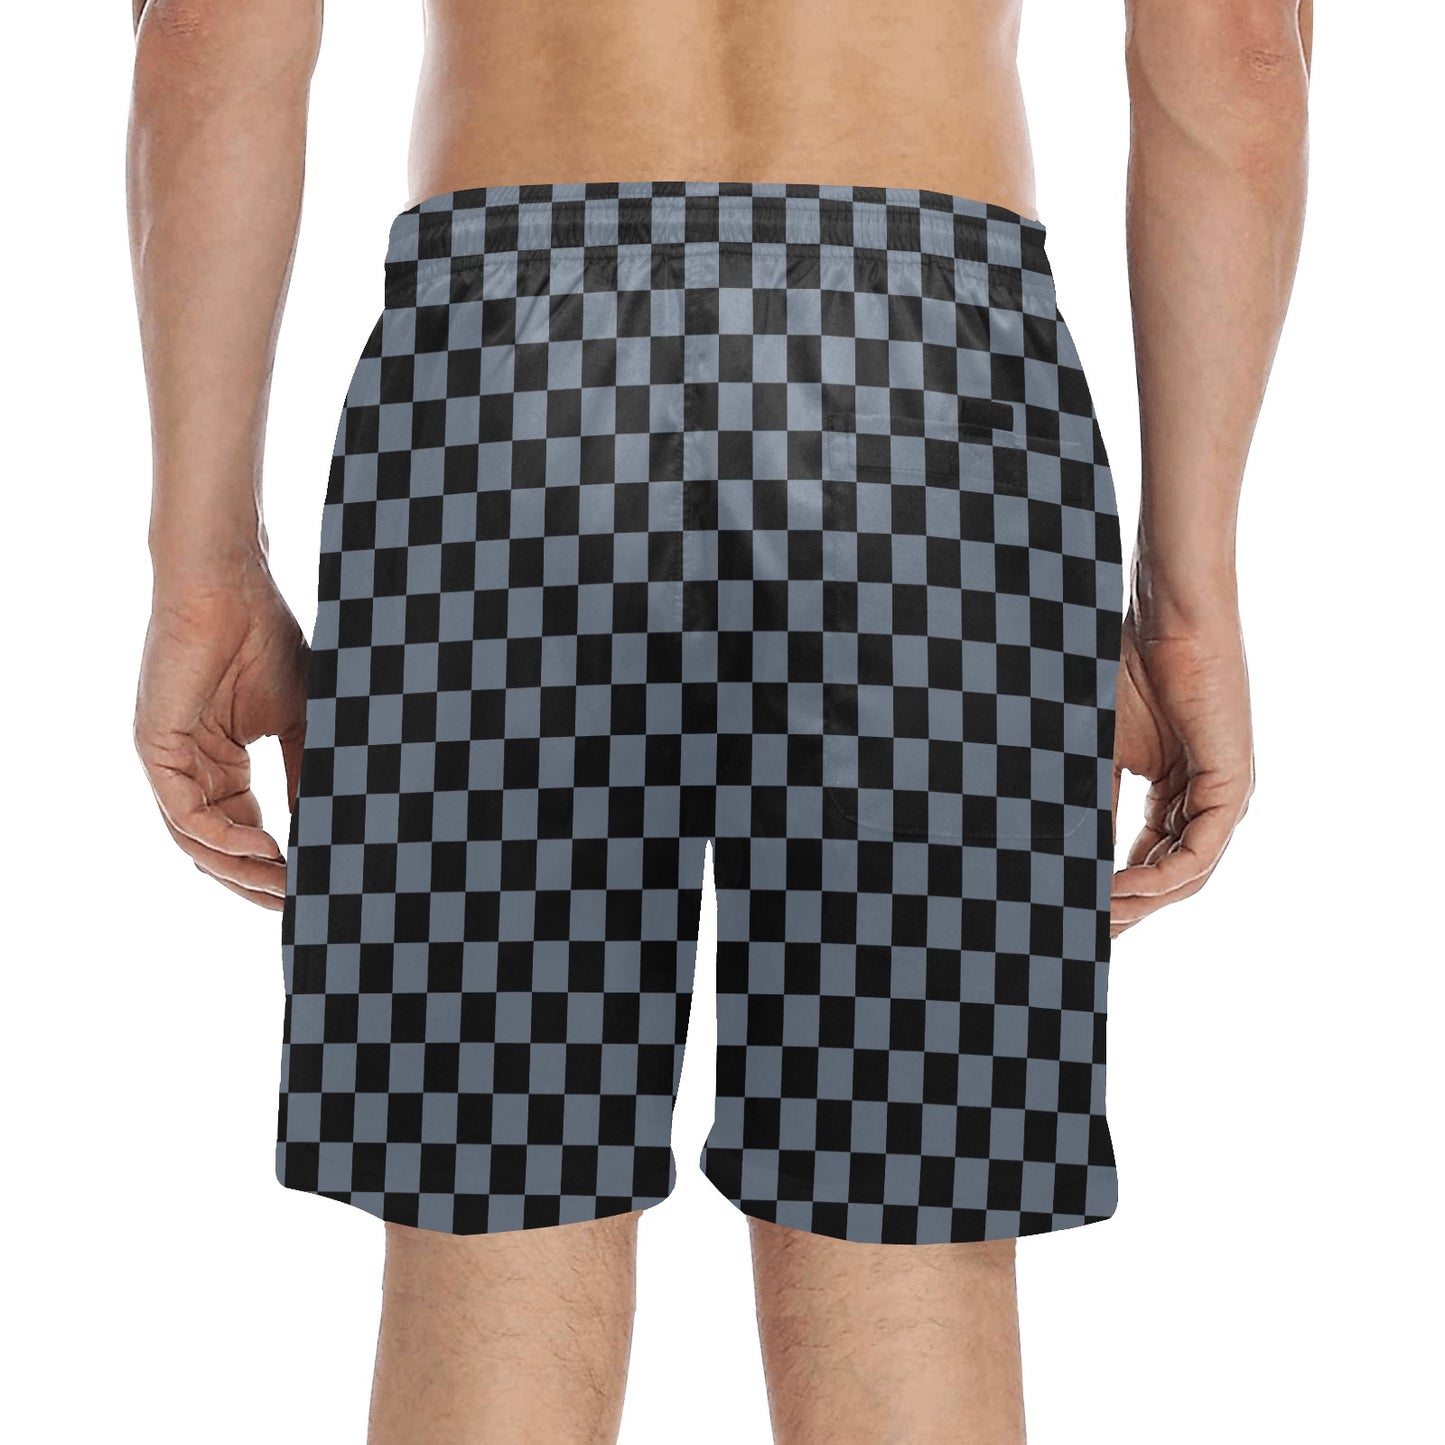 Black Grey Checkered Men Swim Trunks, Gray Check Mid Length Shorts Beach Pockets Mesh Lining Drawstring Male Bathing Suit Plus Size Swimwear